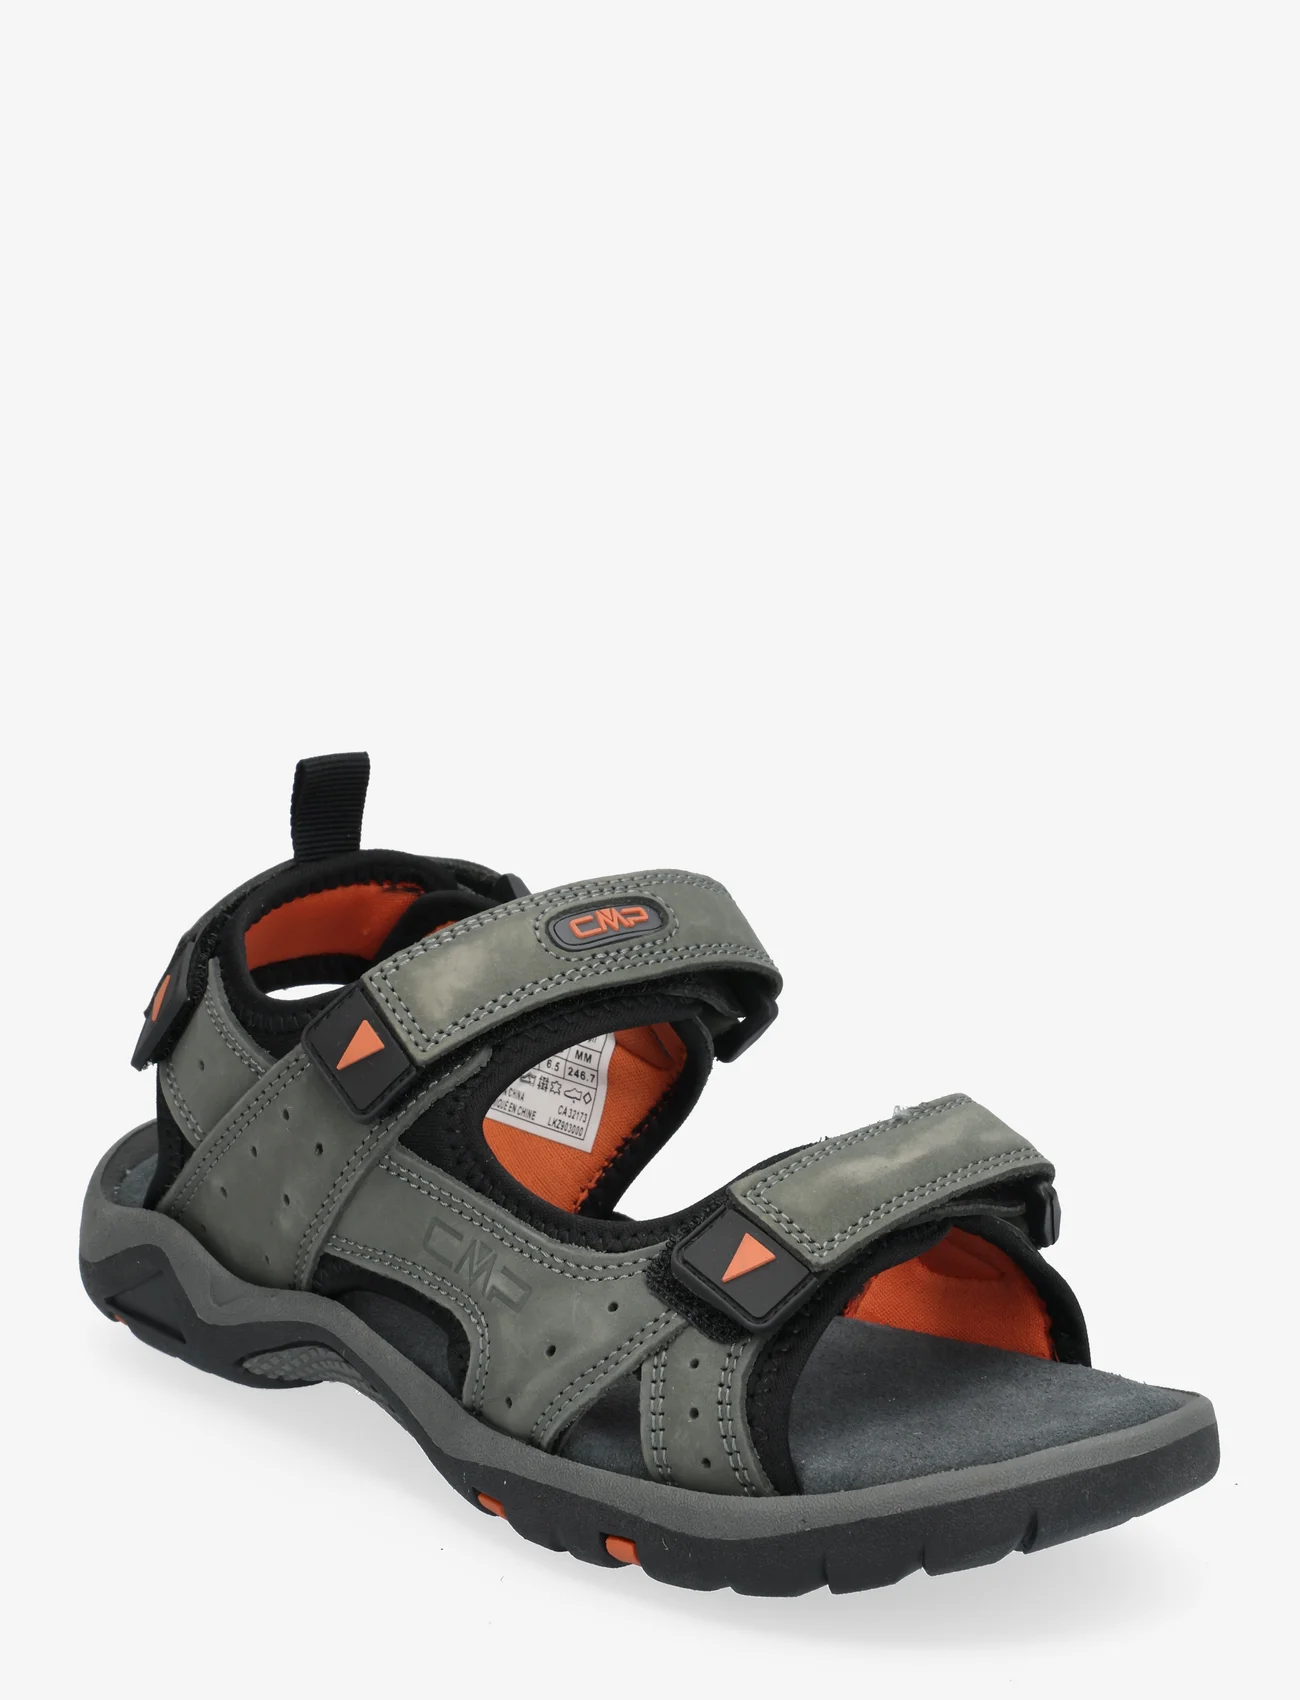 CMP - Almaak Hiking Sandal - hiking sandals - grey - 0